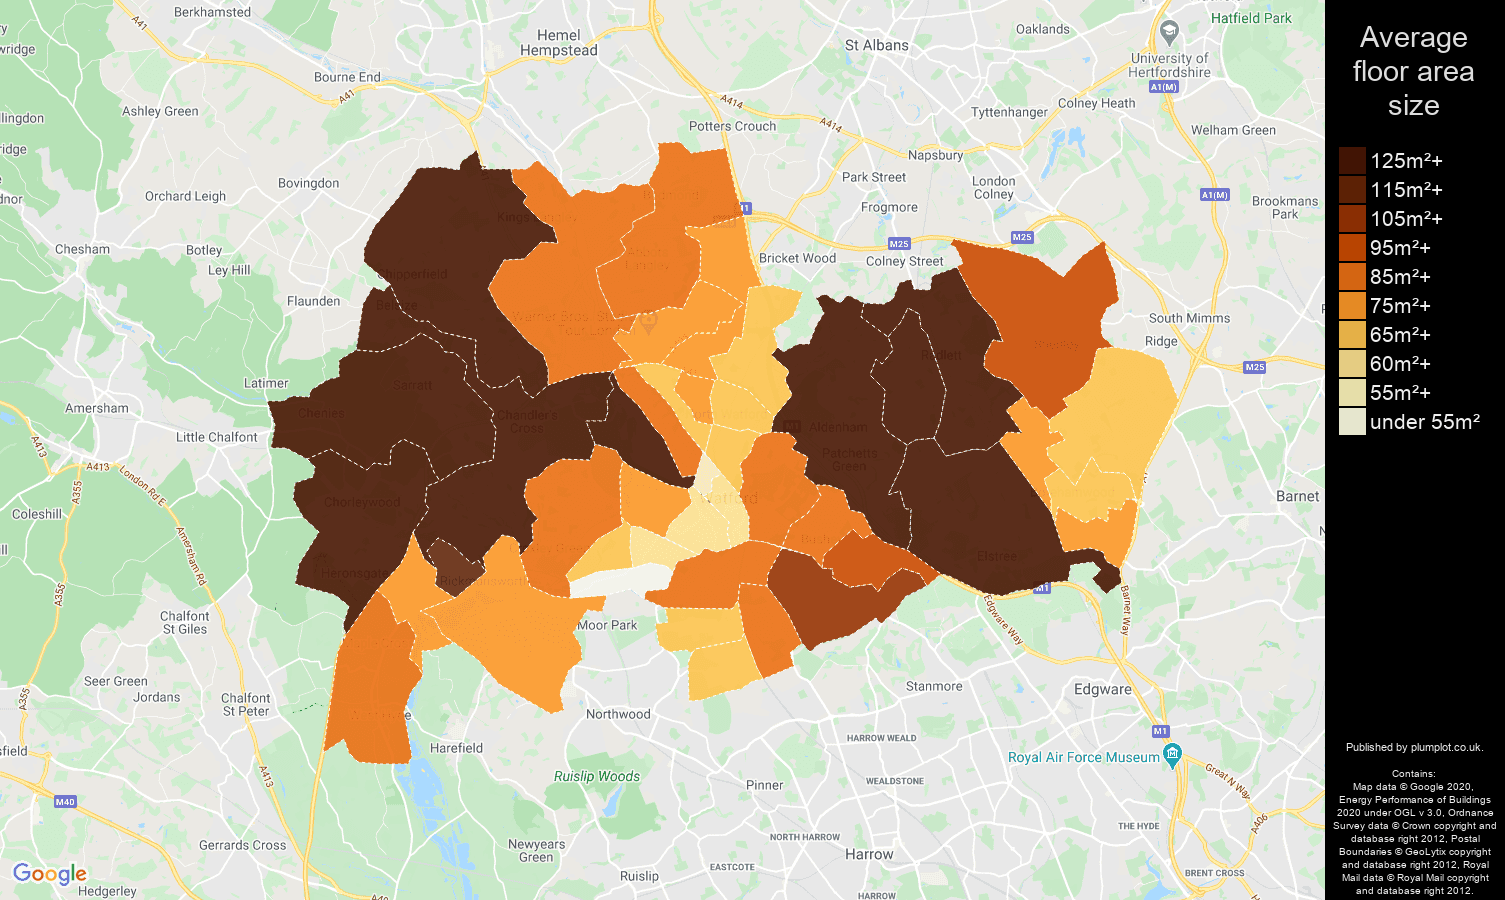 Watford map of average floor area size of properties